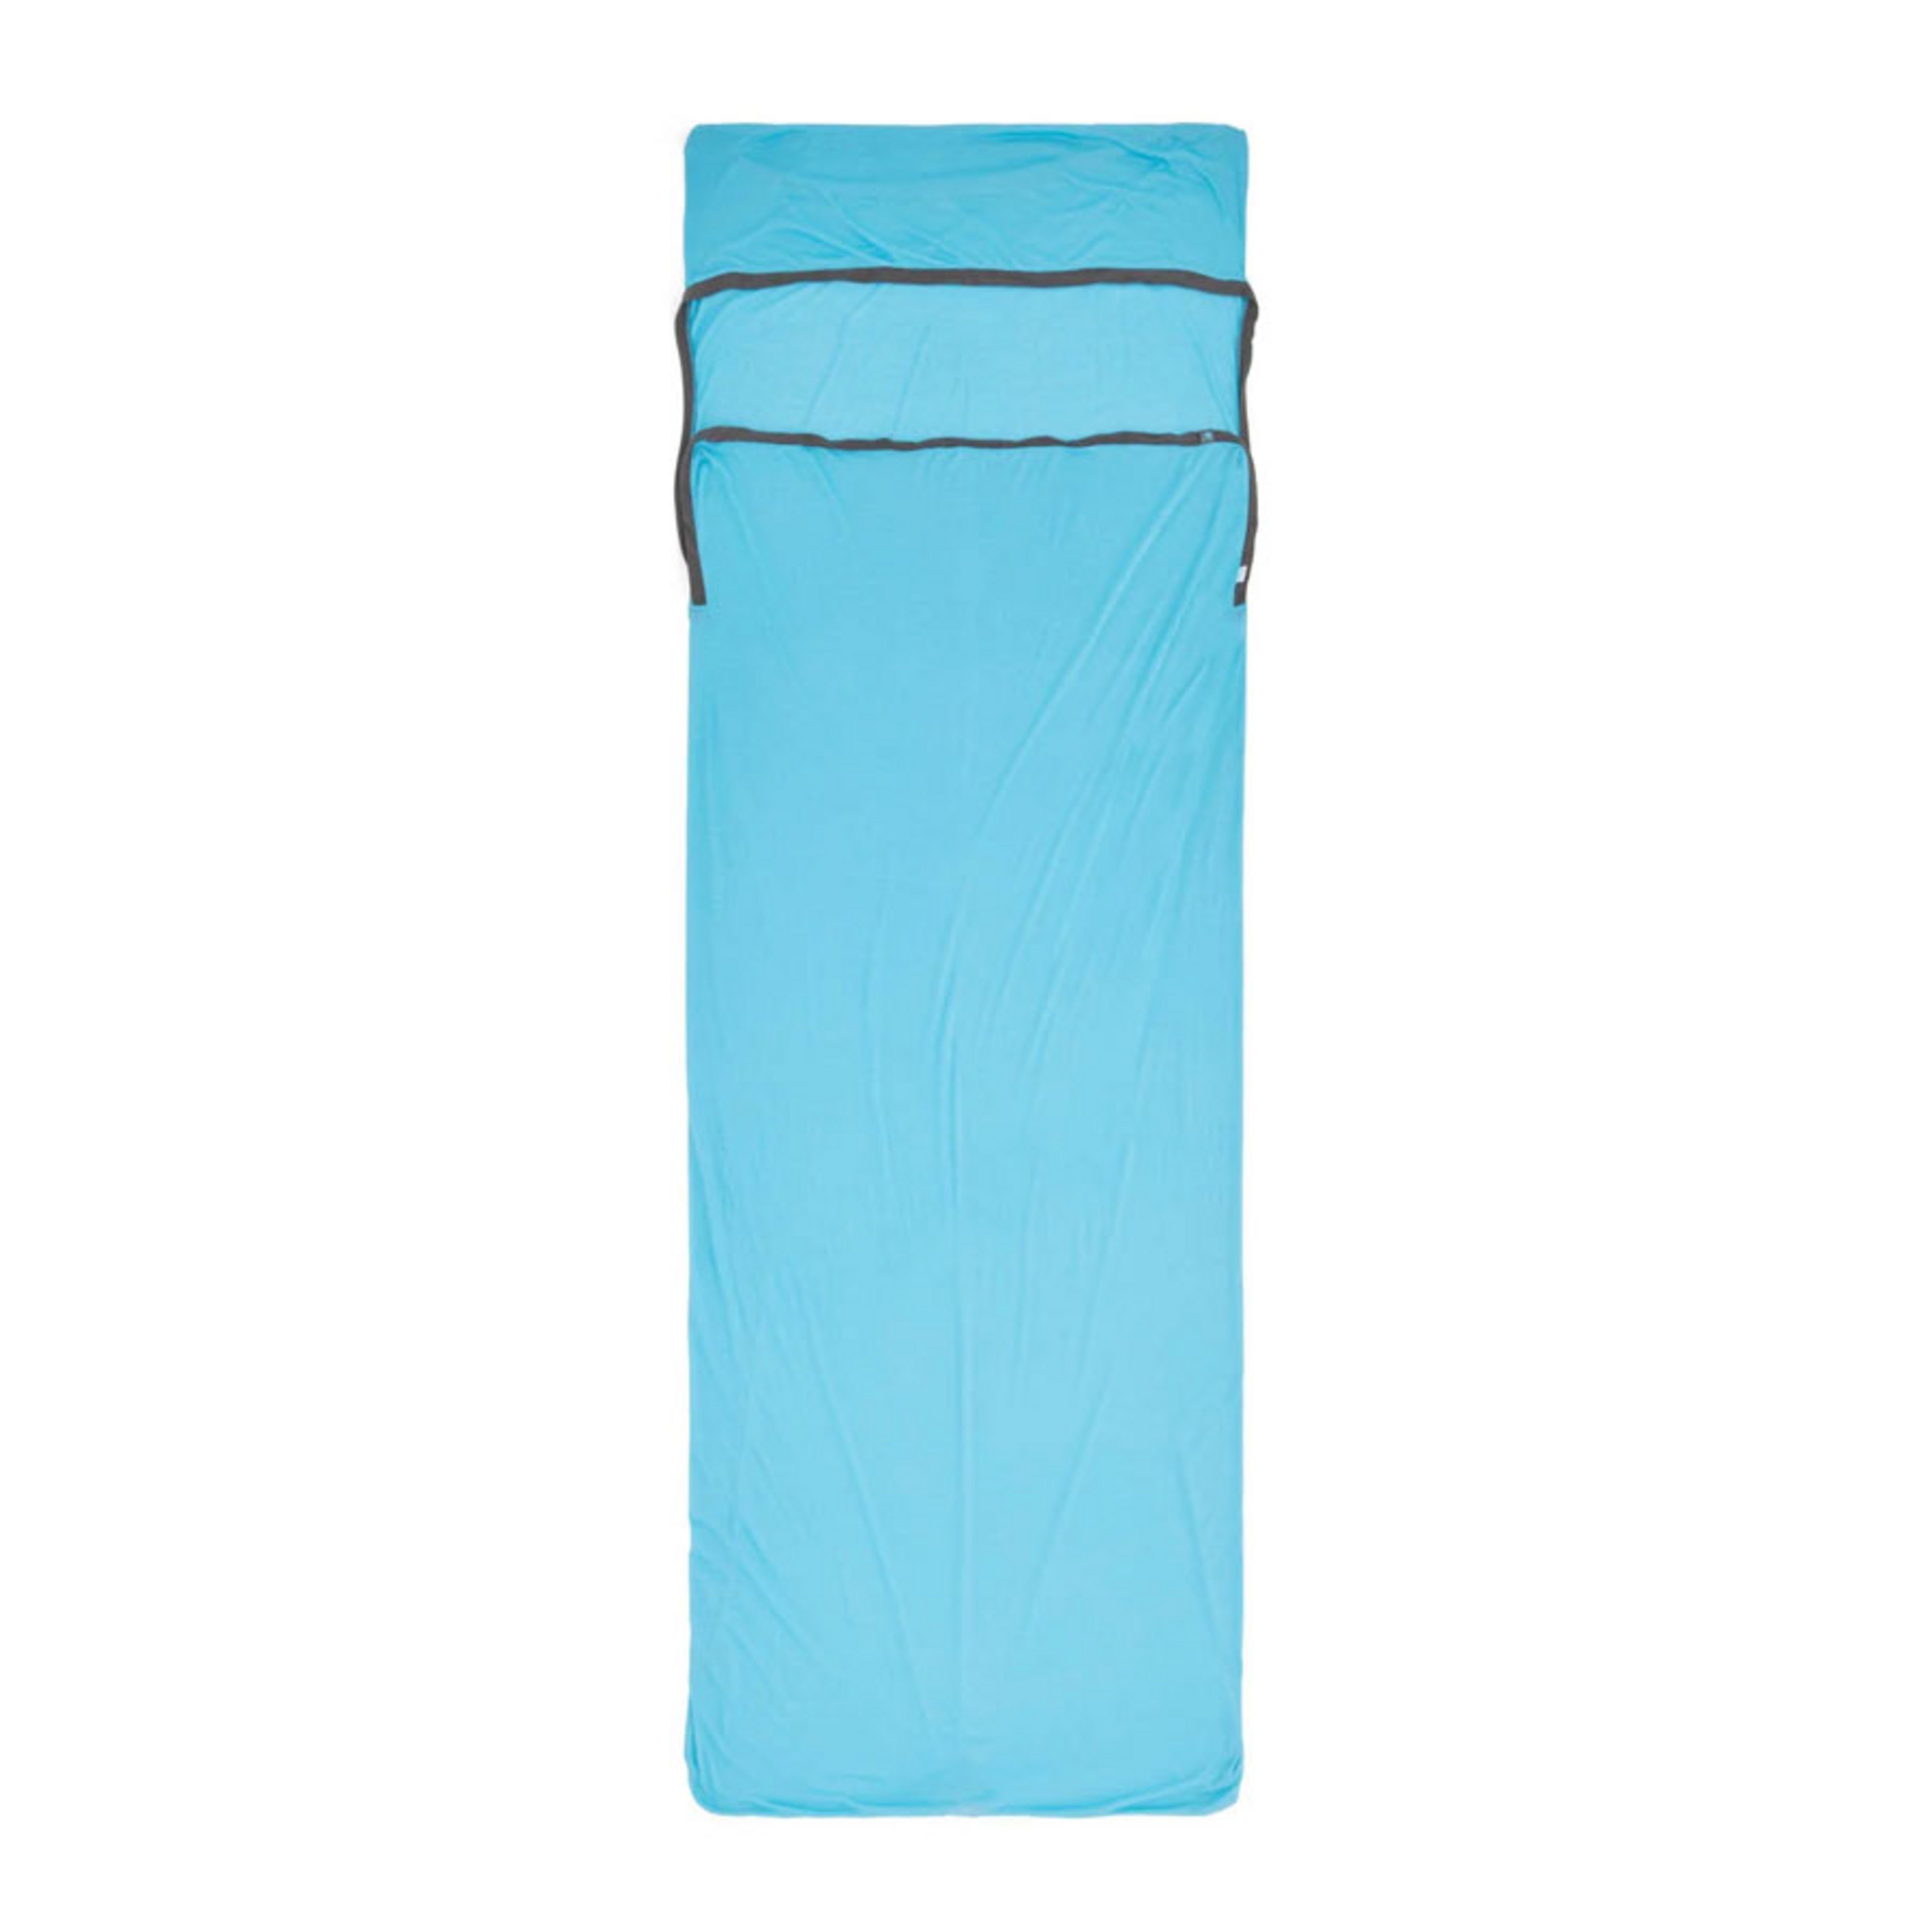 Sea To Summit Breeze Sleeping Bag Liner- Rectangle with Pilloe Sleeve